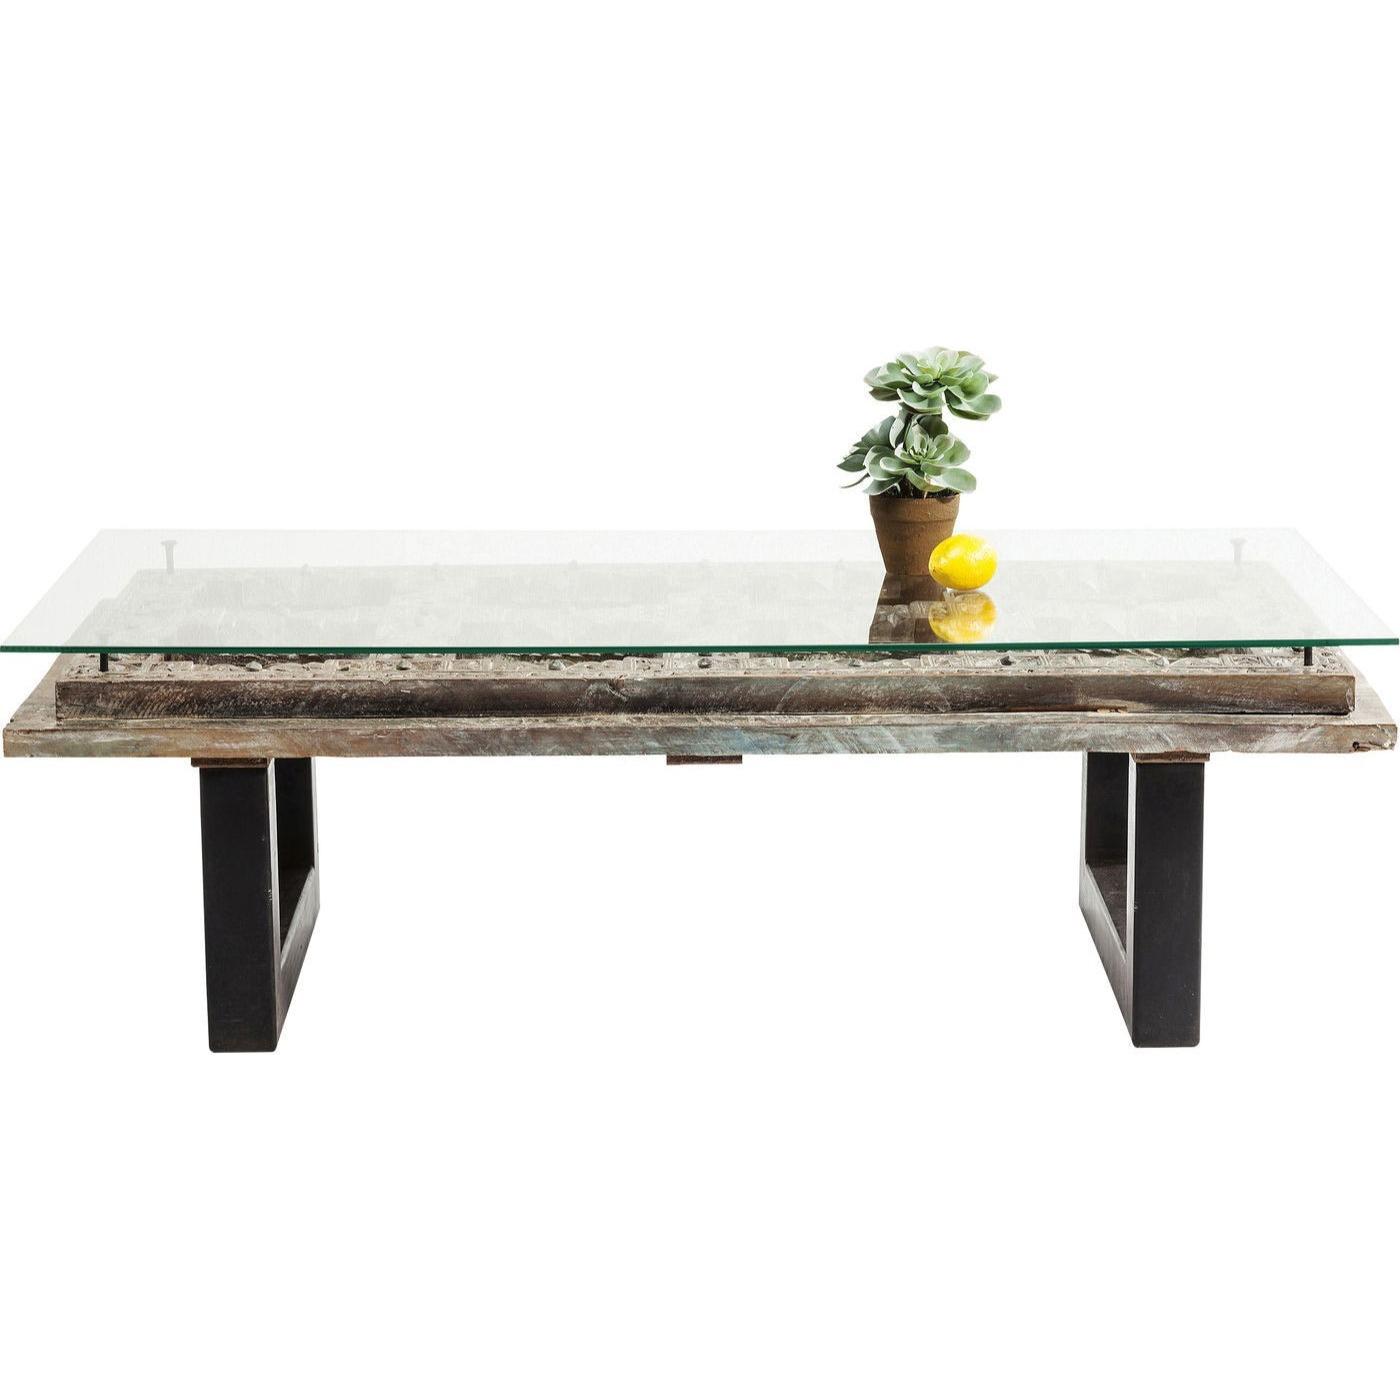 Table basse Kalif 140x70cm Kare Design